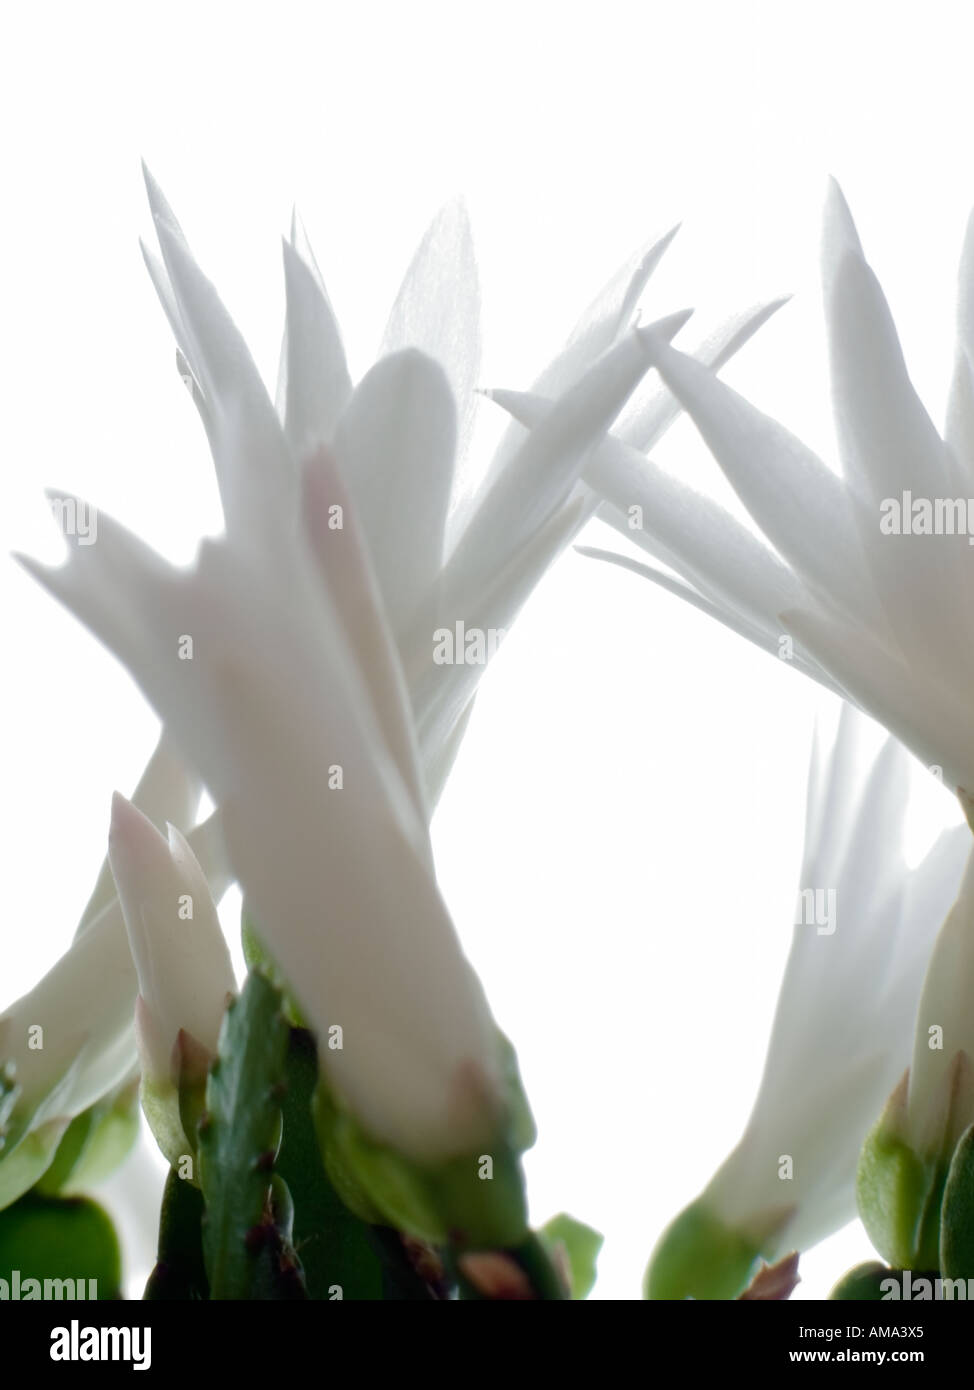 White cactus flowers Stock Photo